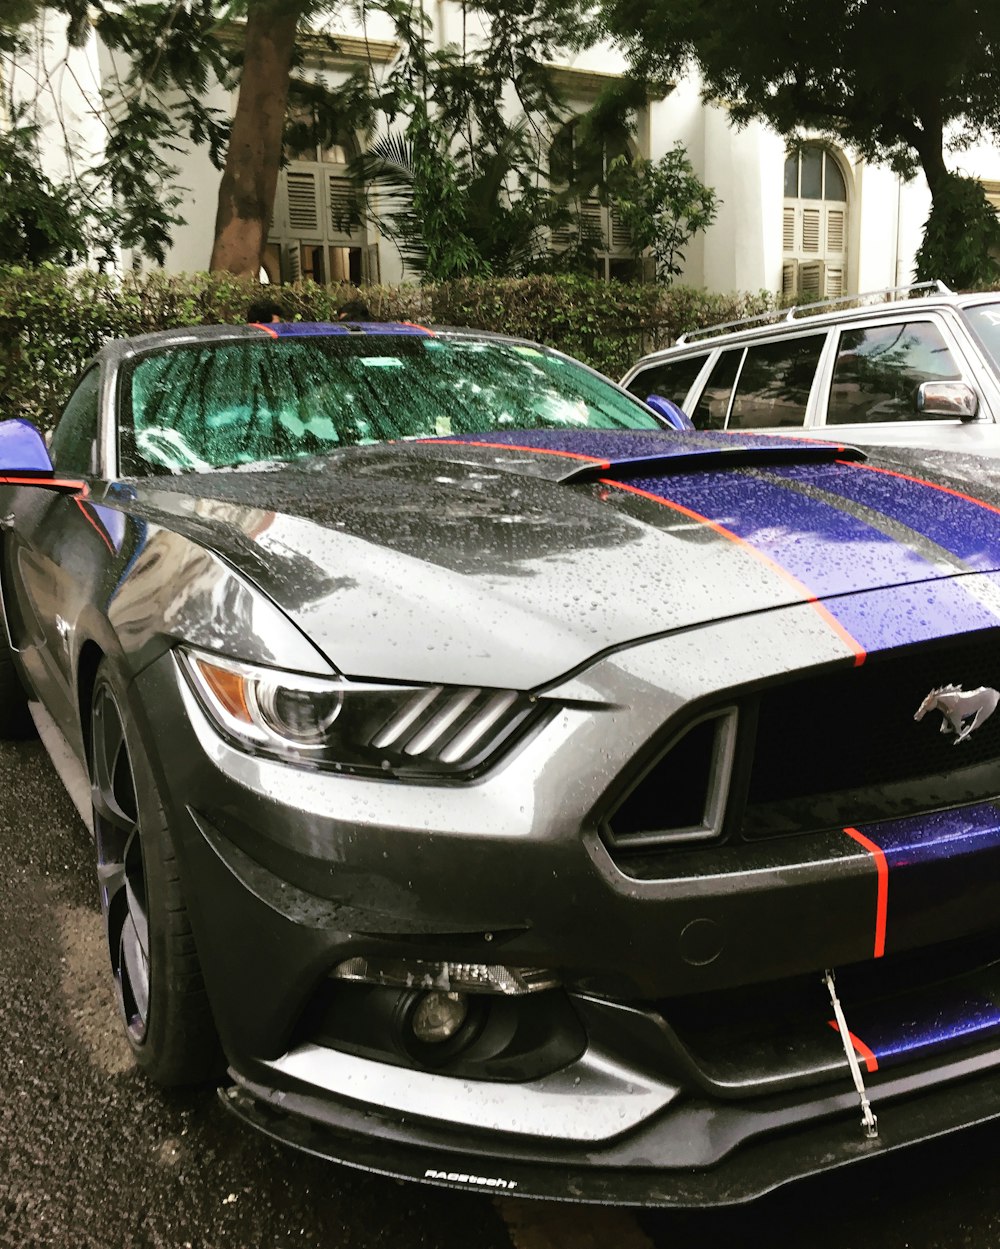 Ein Mustang Mustang parkte am Straßenrand